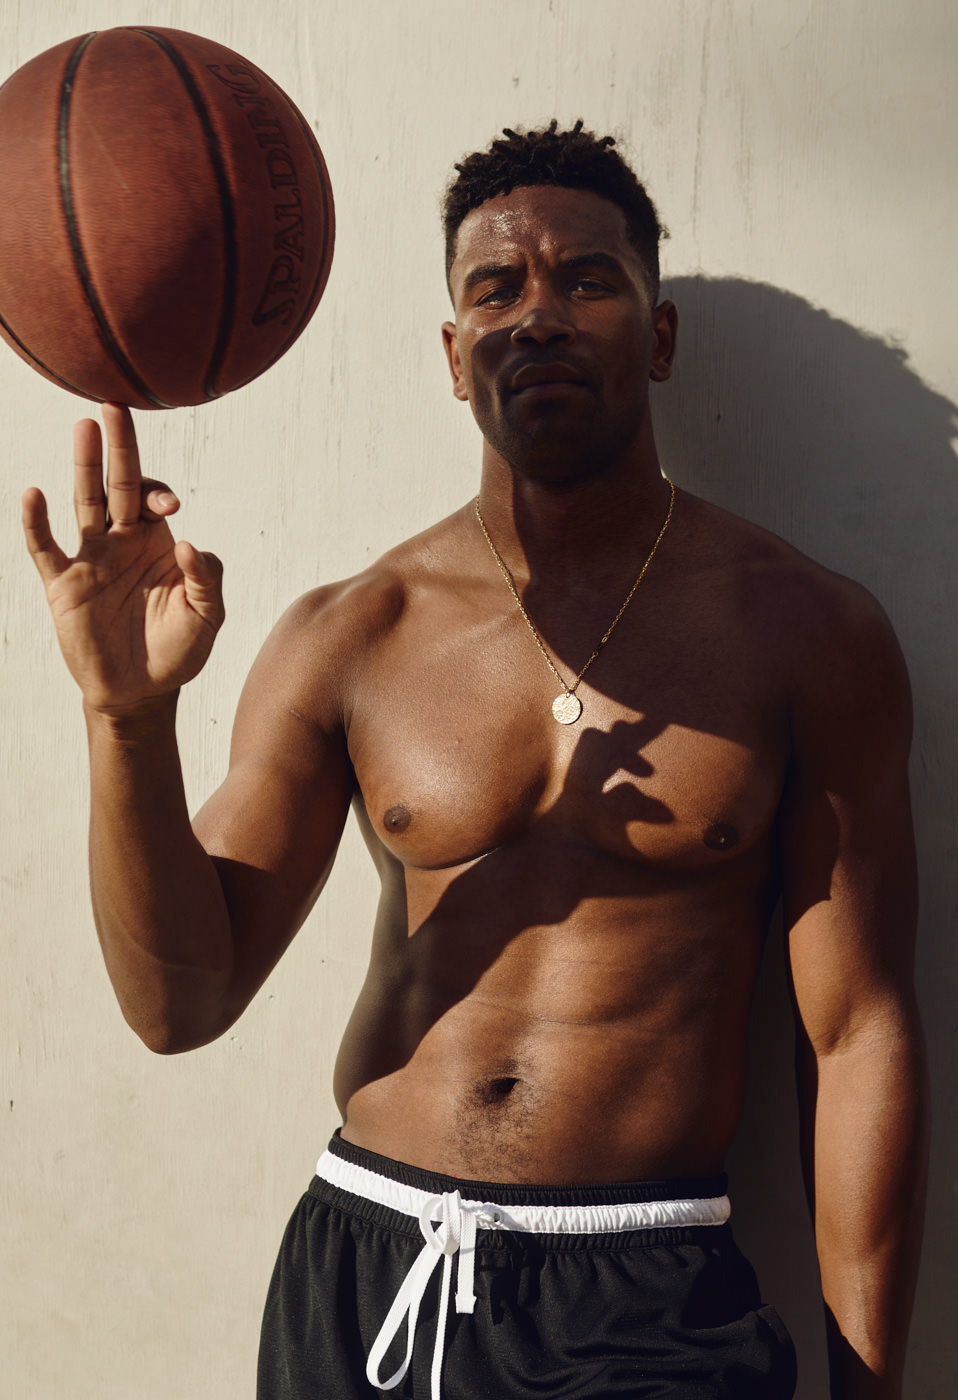 Nike basketball summer Outdoor Street warm athlete sweat portrait action